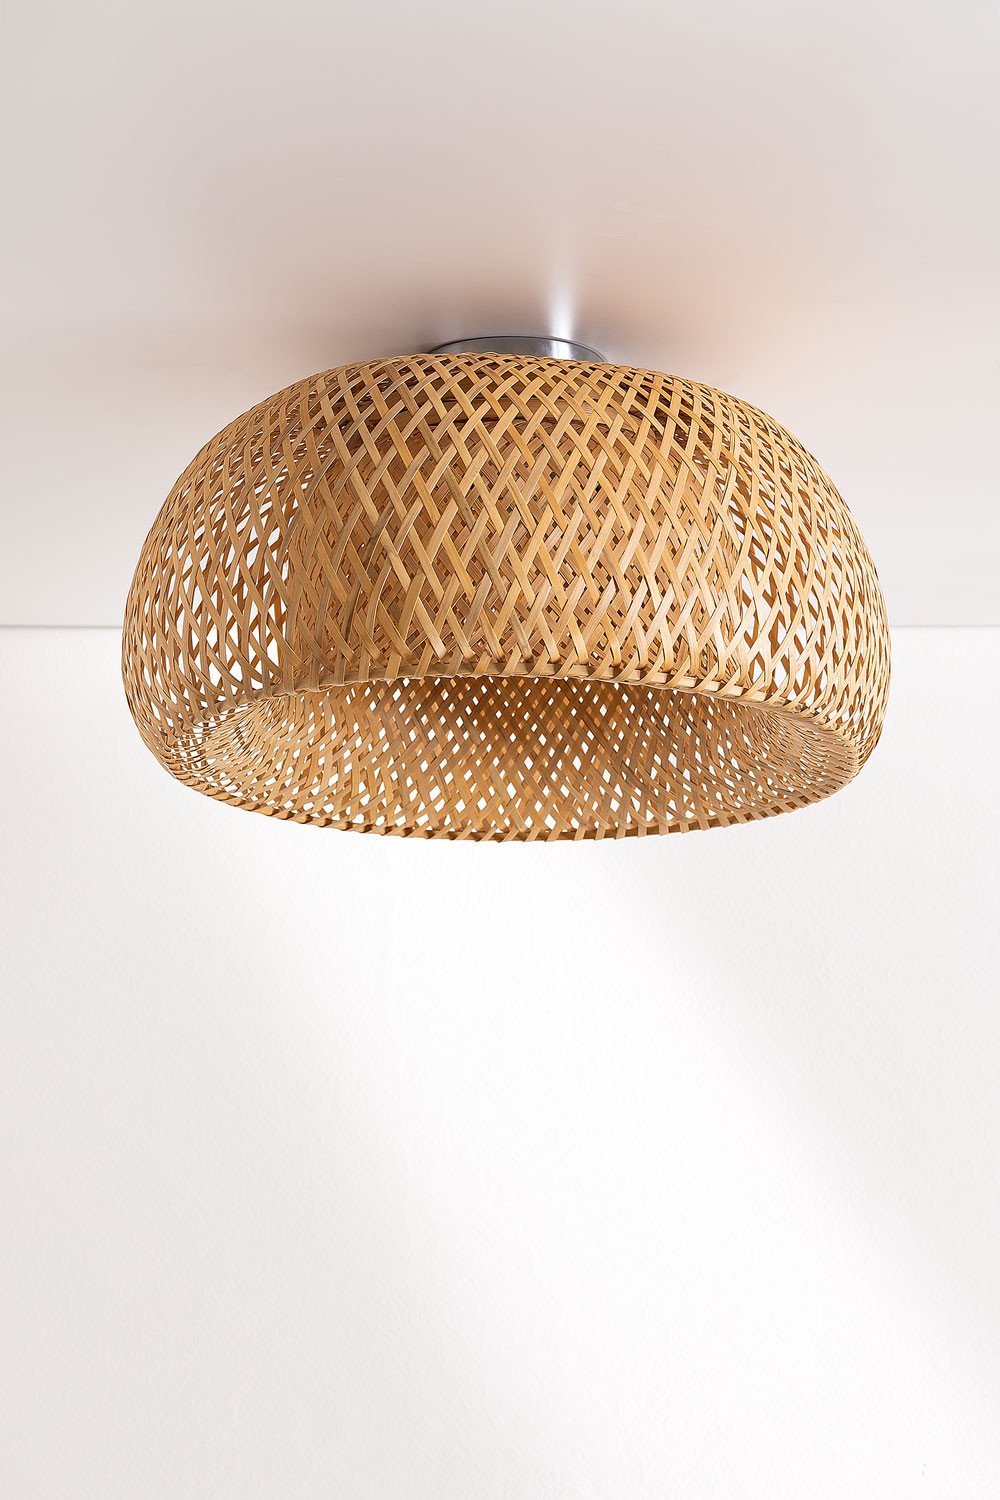 Bambusowa Lampa Sufitowa Taamper Style, obrazek w galerii 1